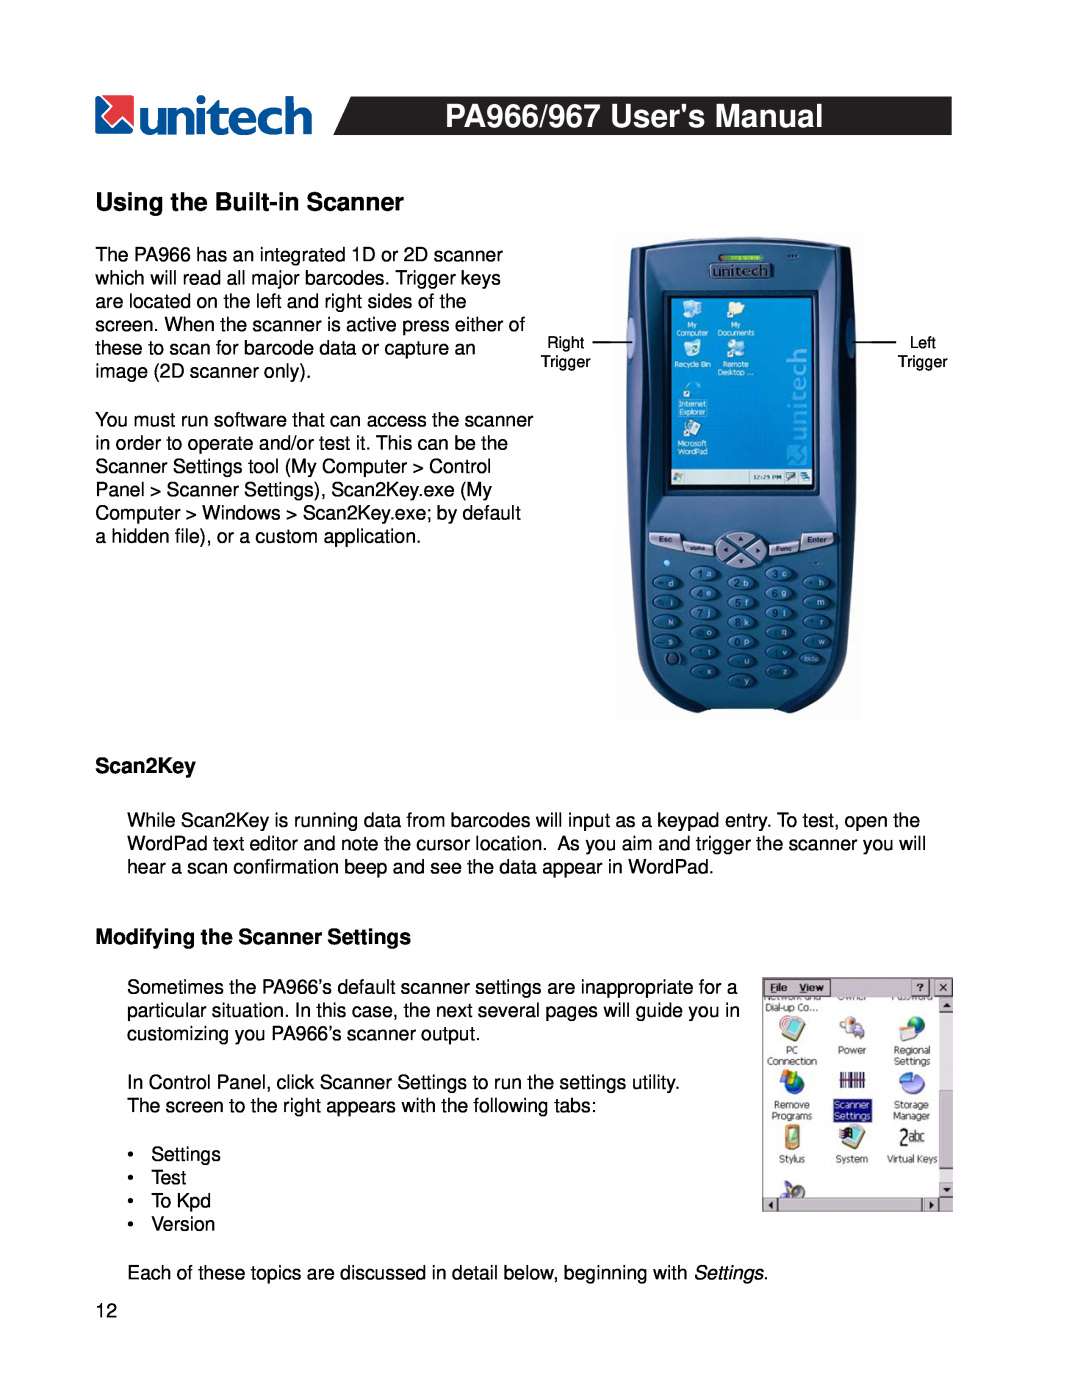 Unitech PA967, PA966 user manual Using the Built-inScanner, Scan2Key, Modifying the Scanner Settings 